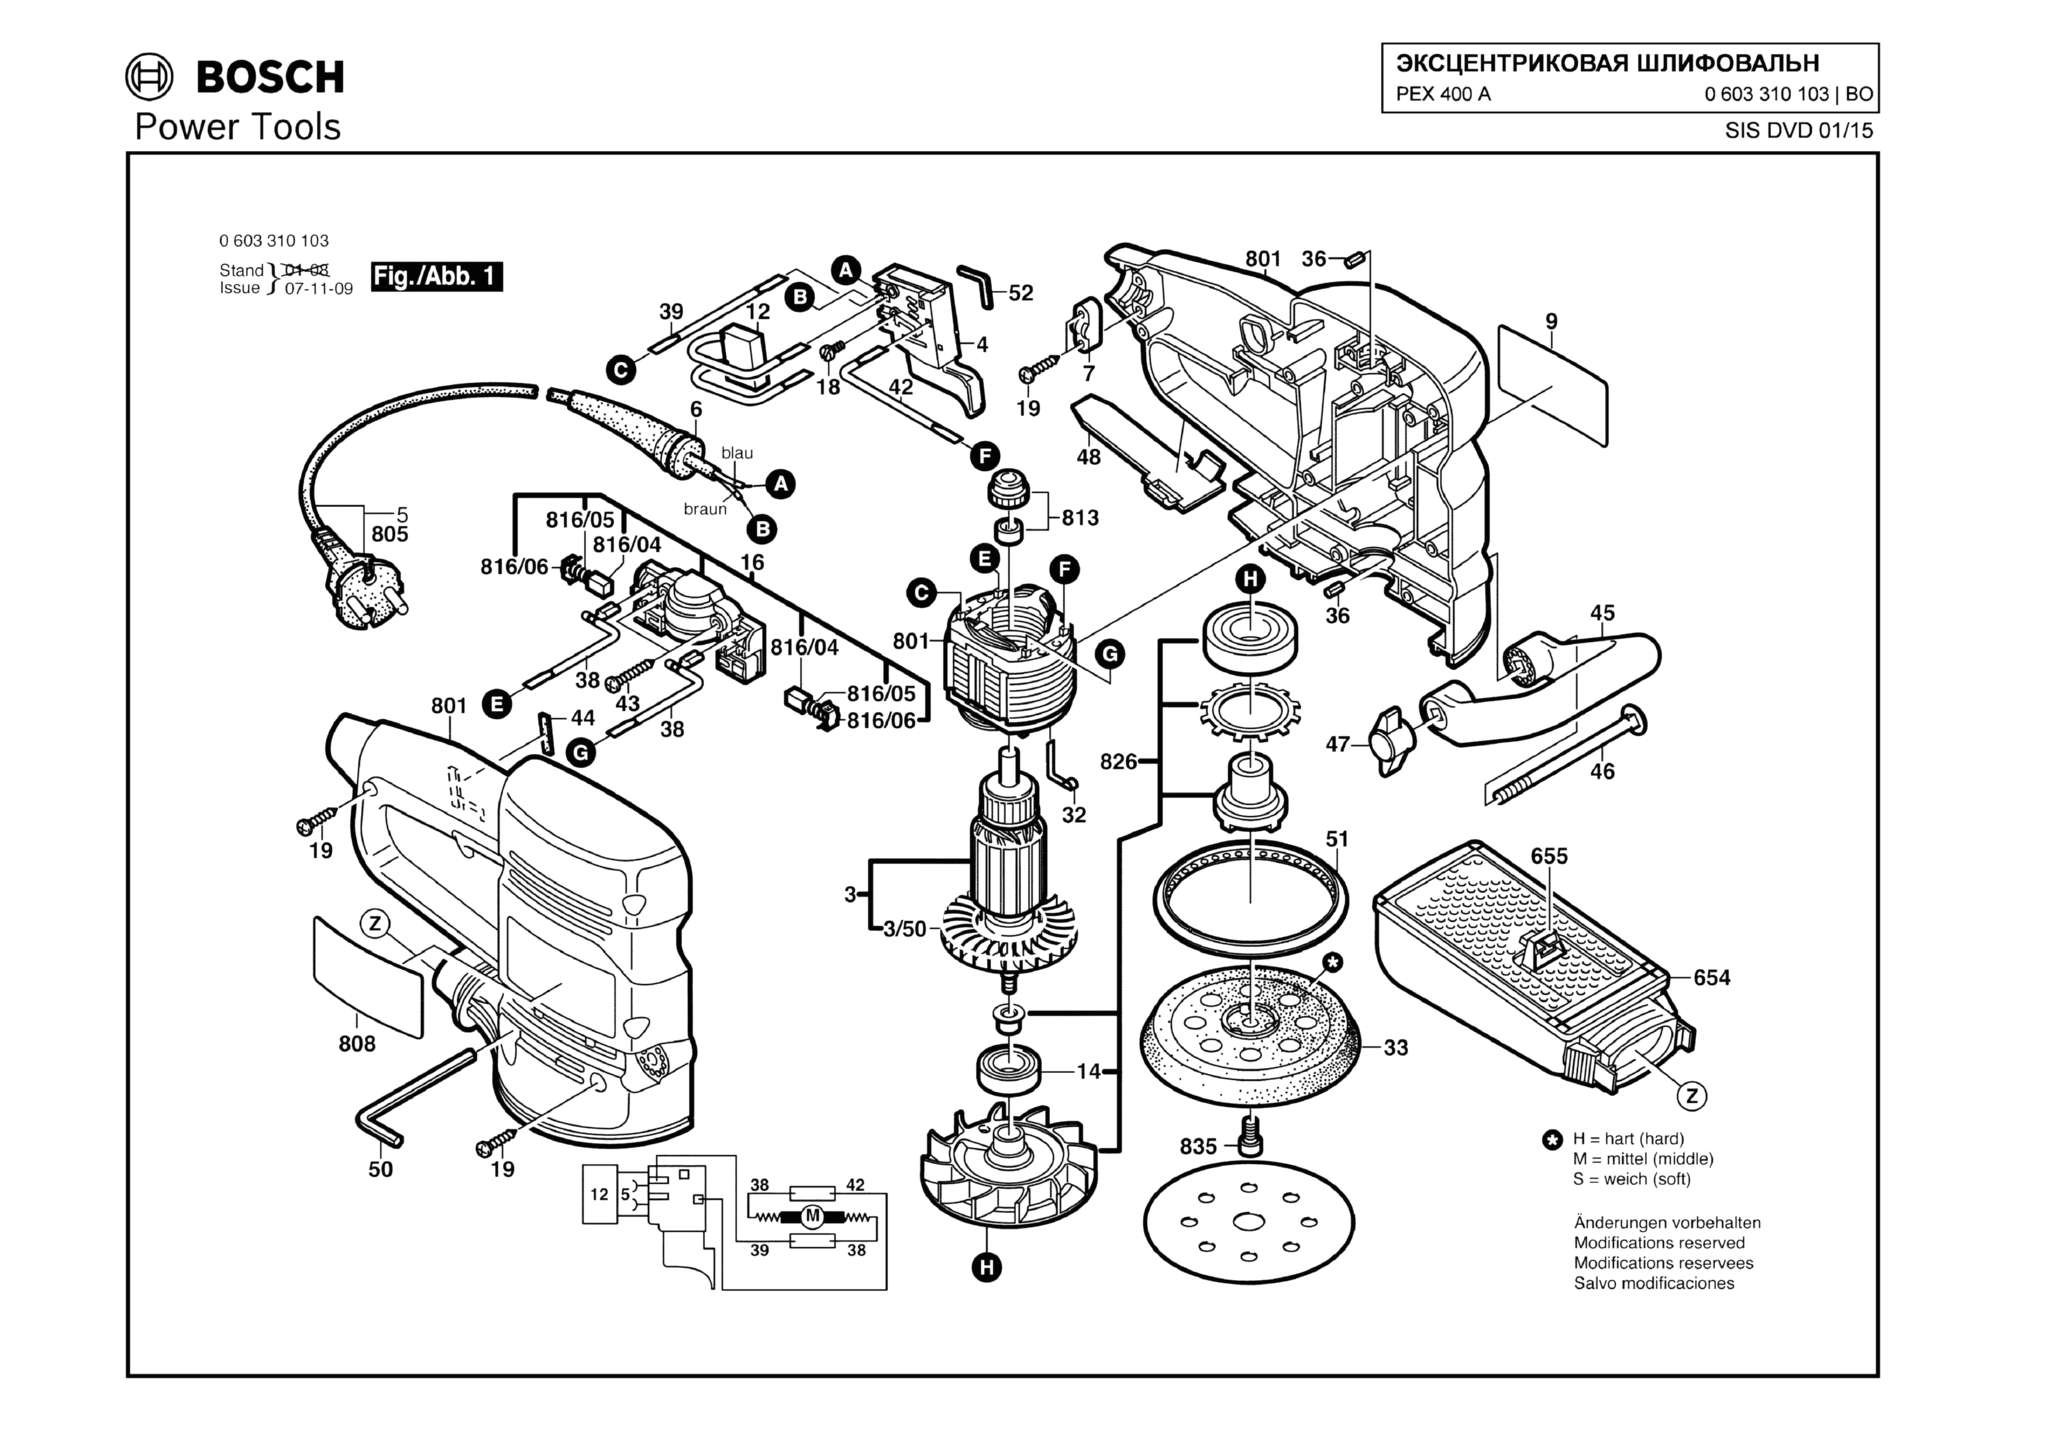 Запчасти, схема и деталировка Bosch PEX 400 A (ТИП 0603310103)